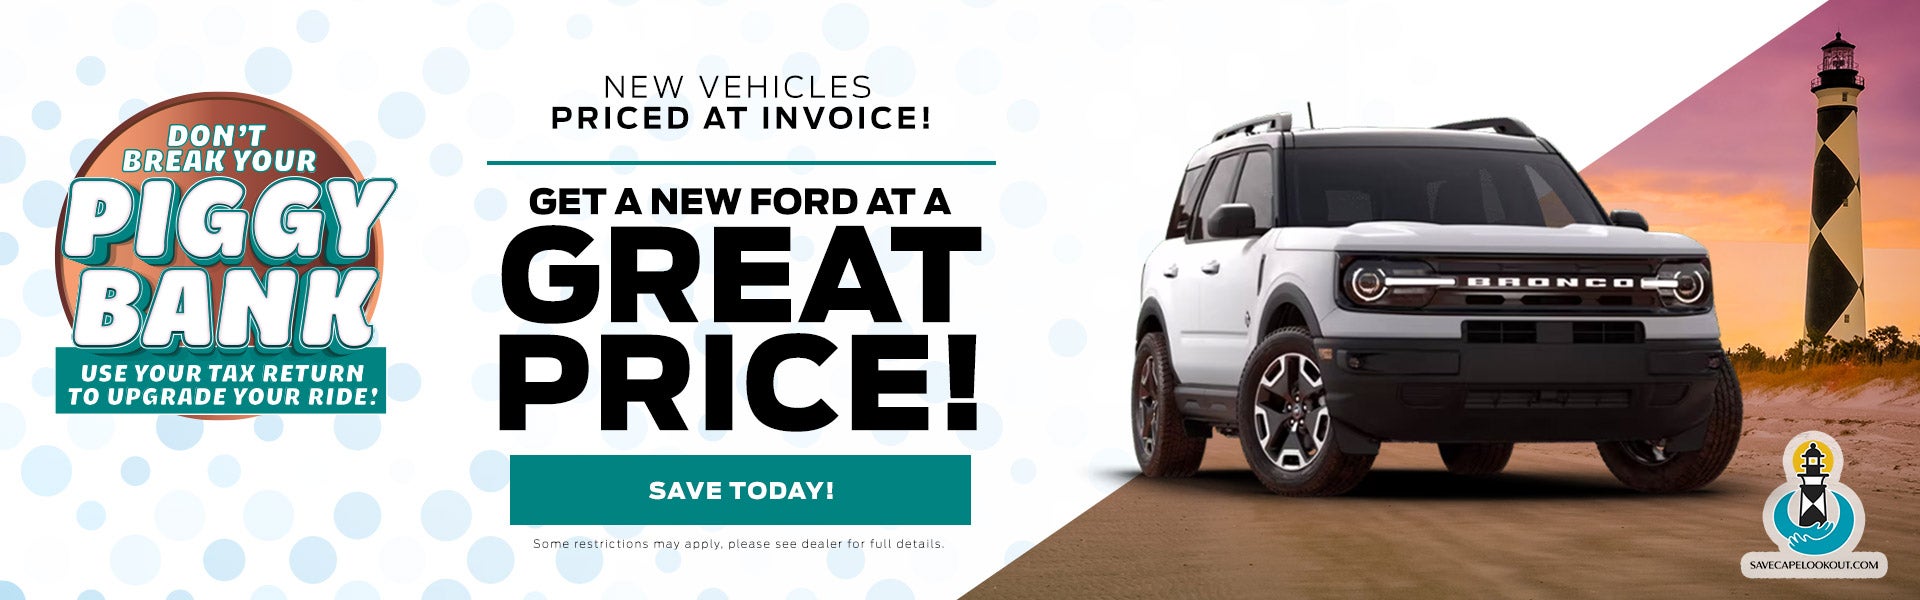 New Vehicles At Invoice Price